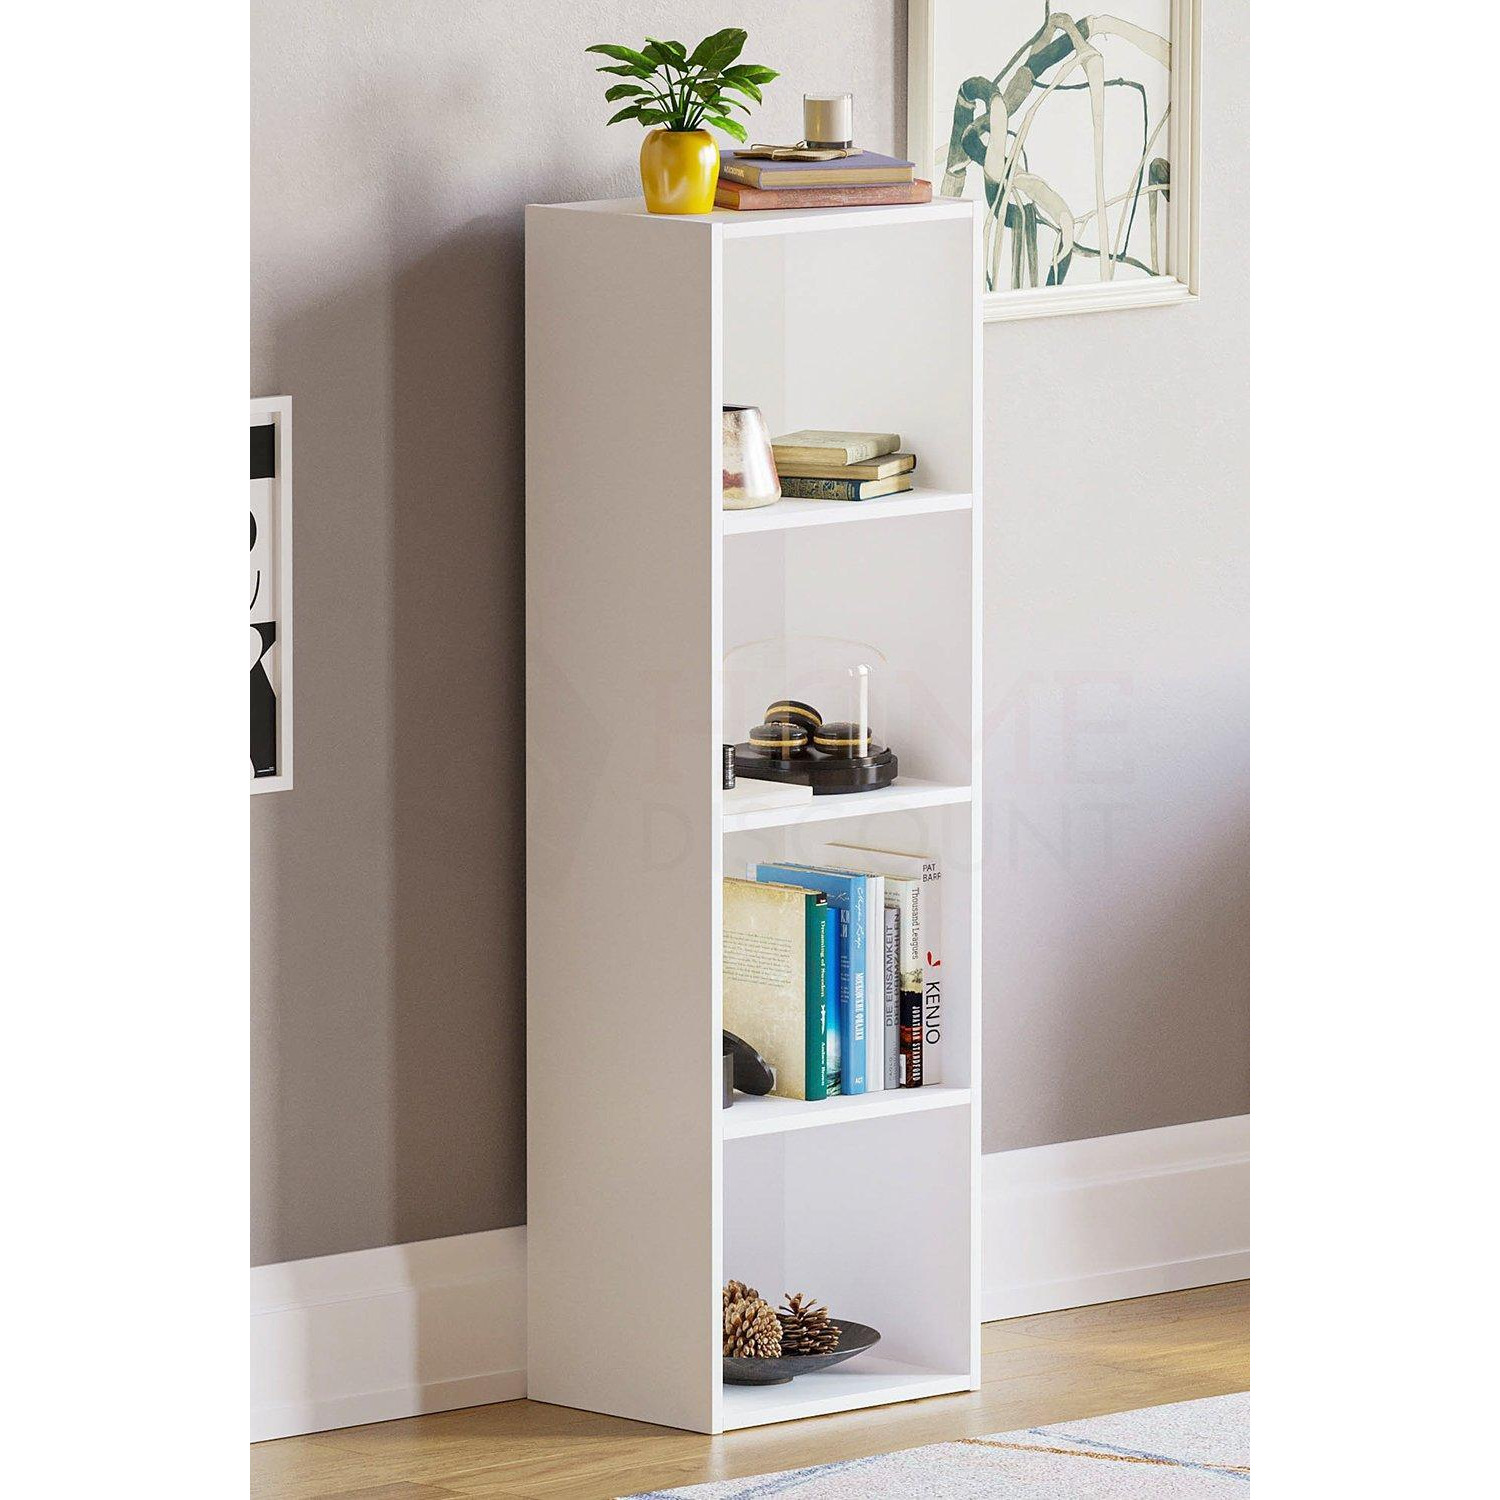 Vida Designs Oxford 4 Tier Cube Bookcase Storage 1060 x 320 x 240 mm - image 1